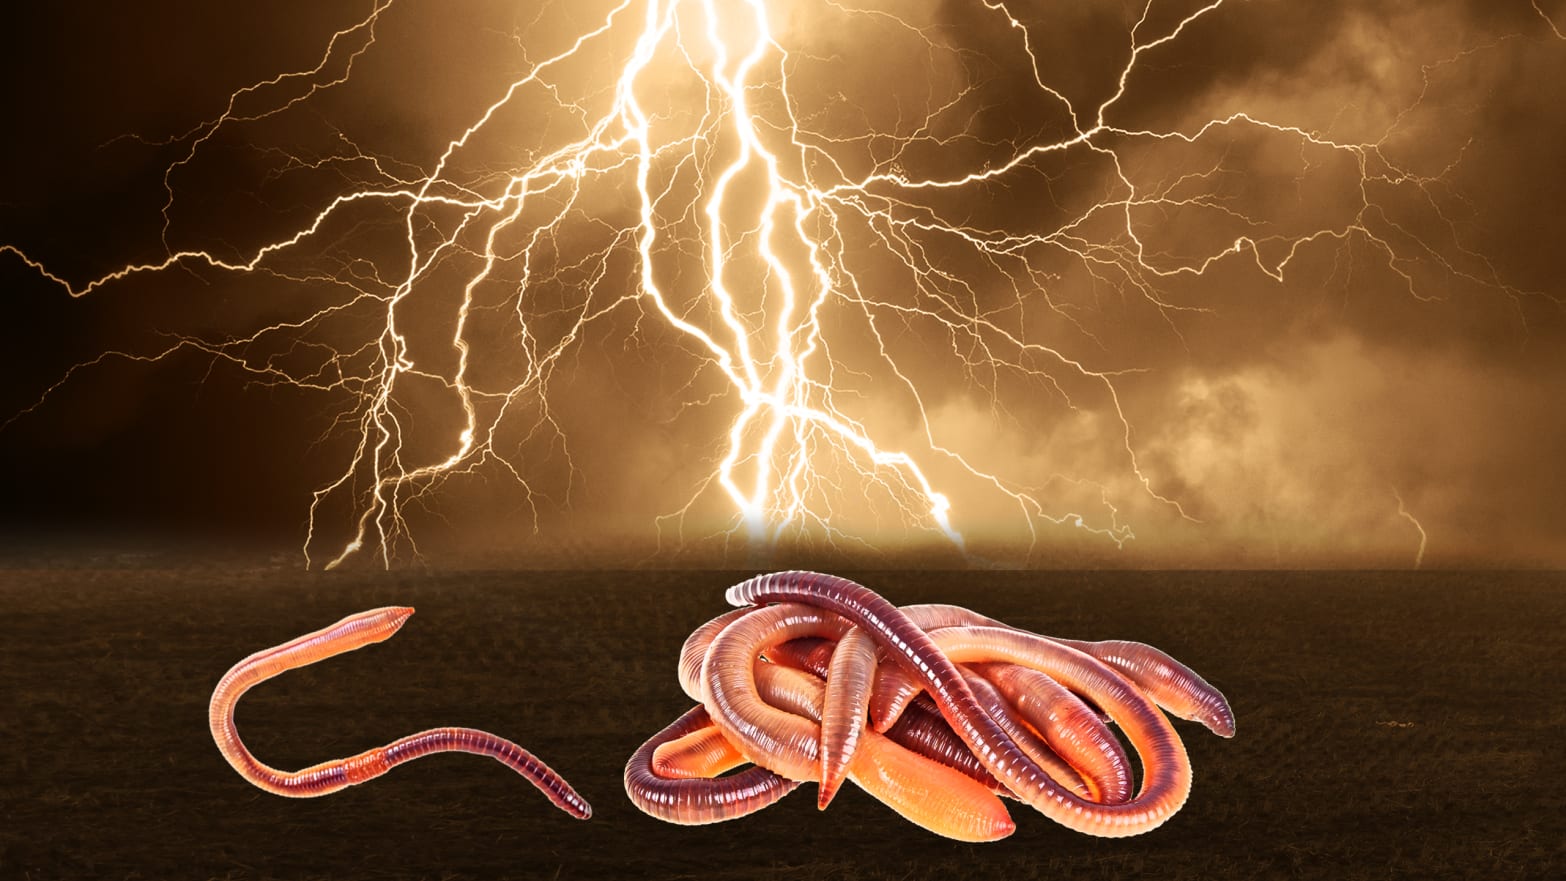 pile of earthworms worms apocalyptic bible scene lightening david montgomery